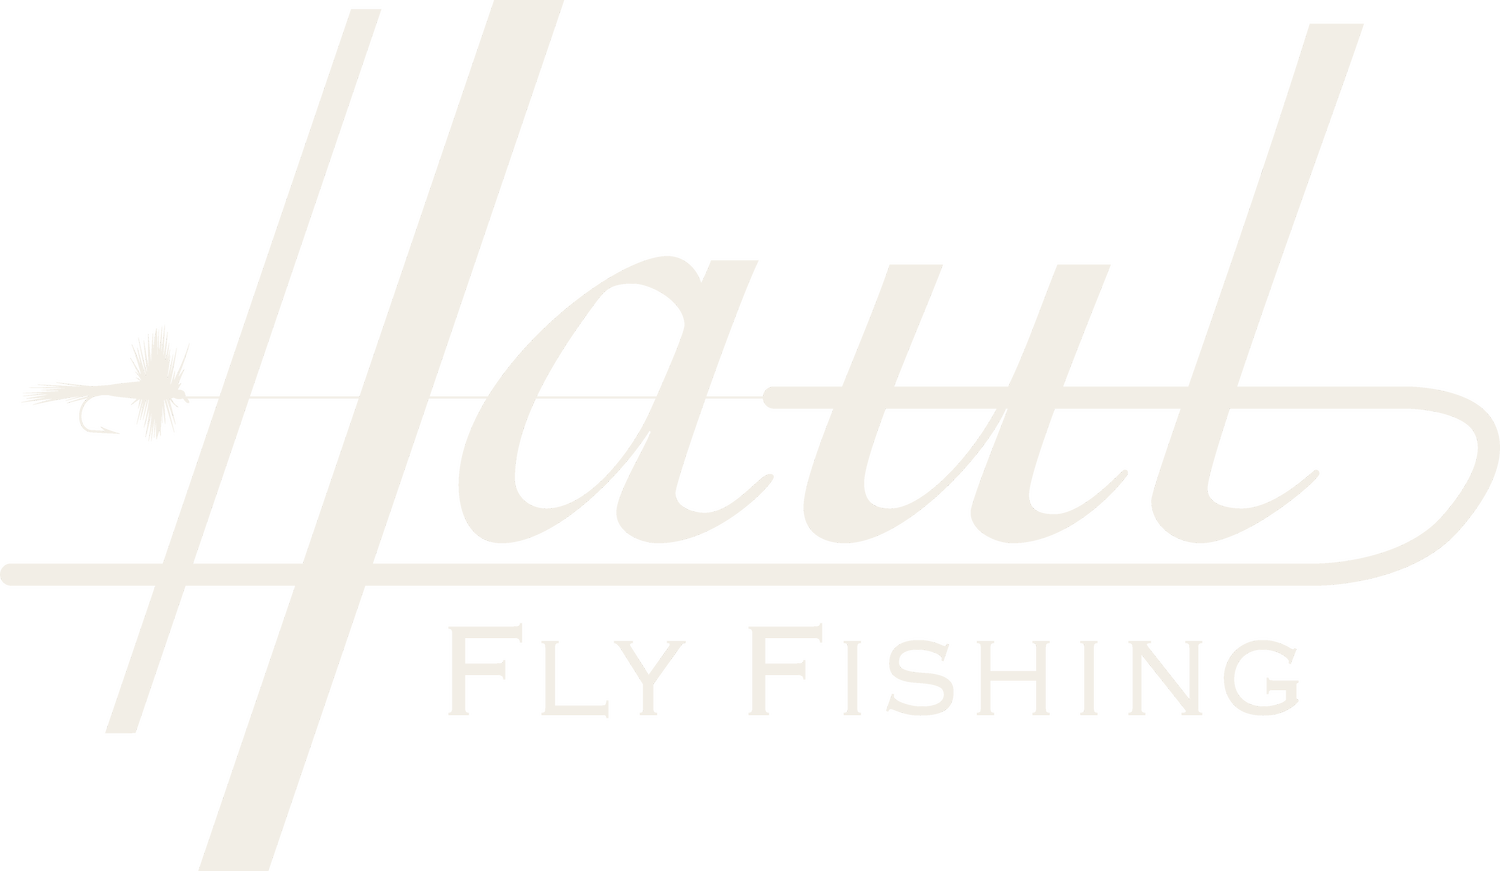 Haul Fly Fishing